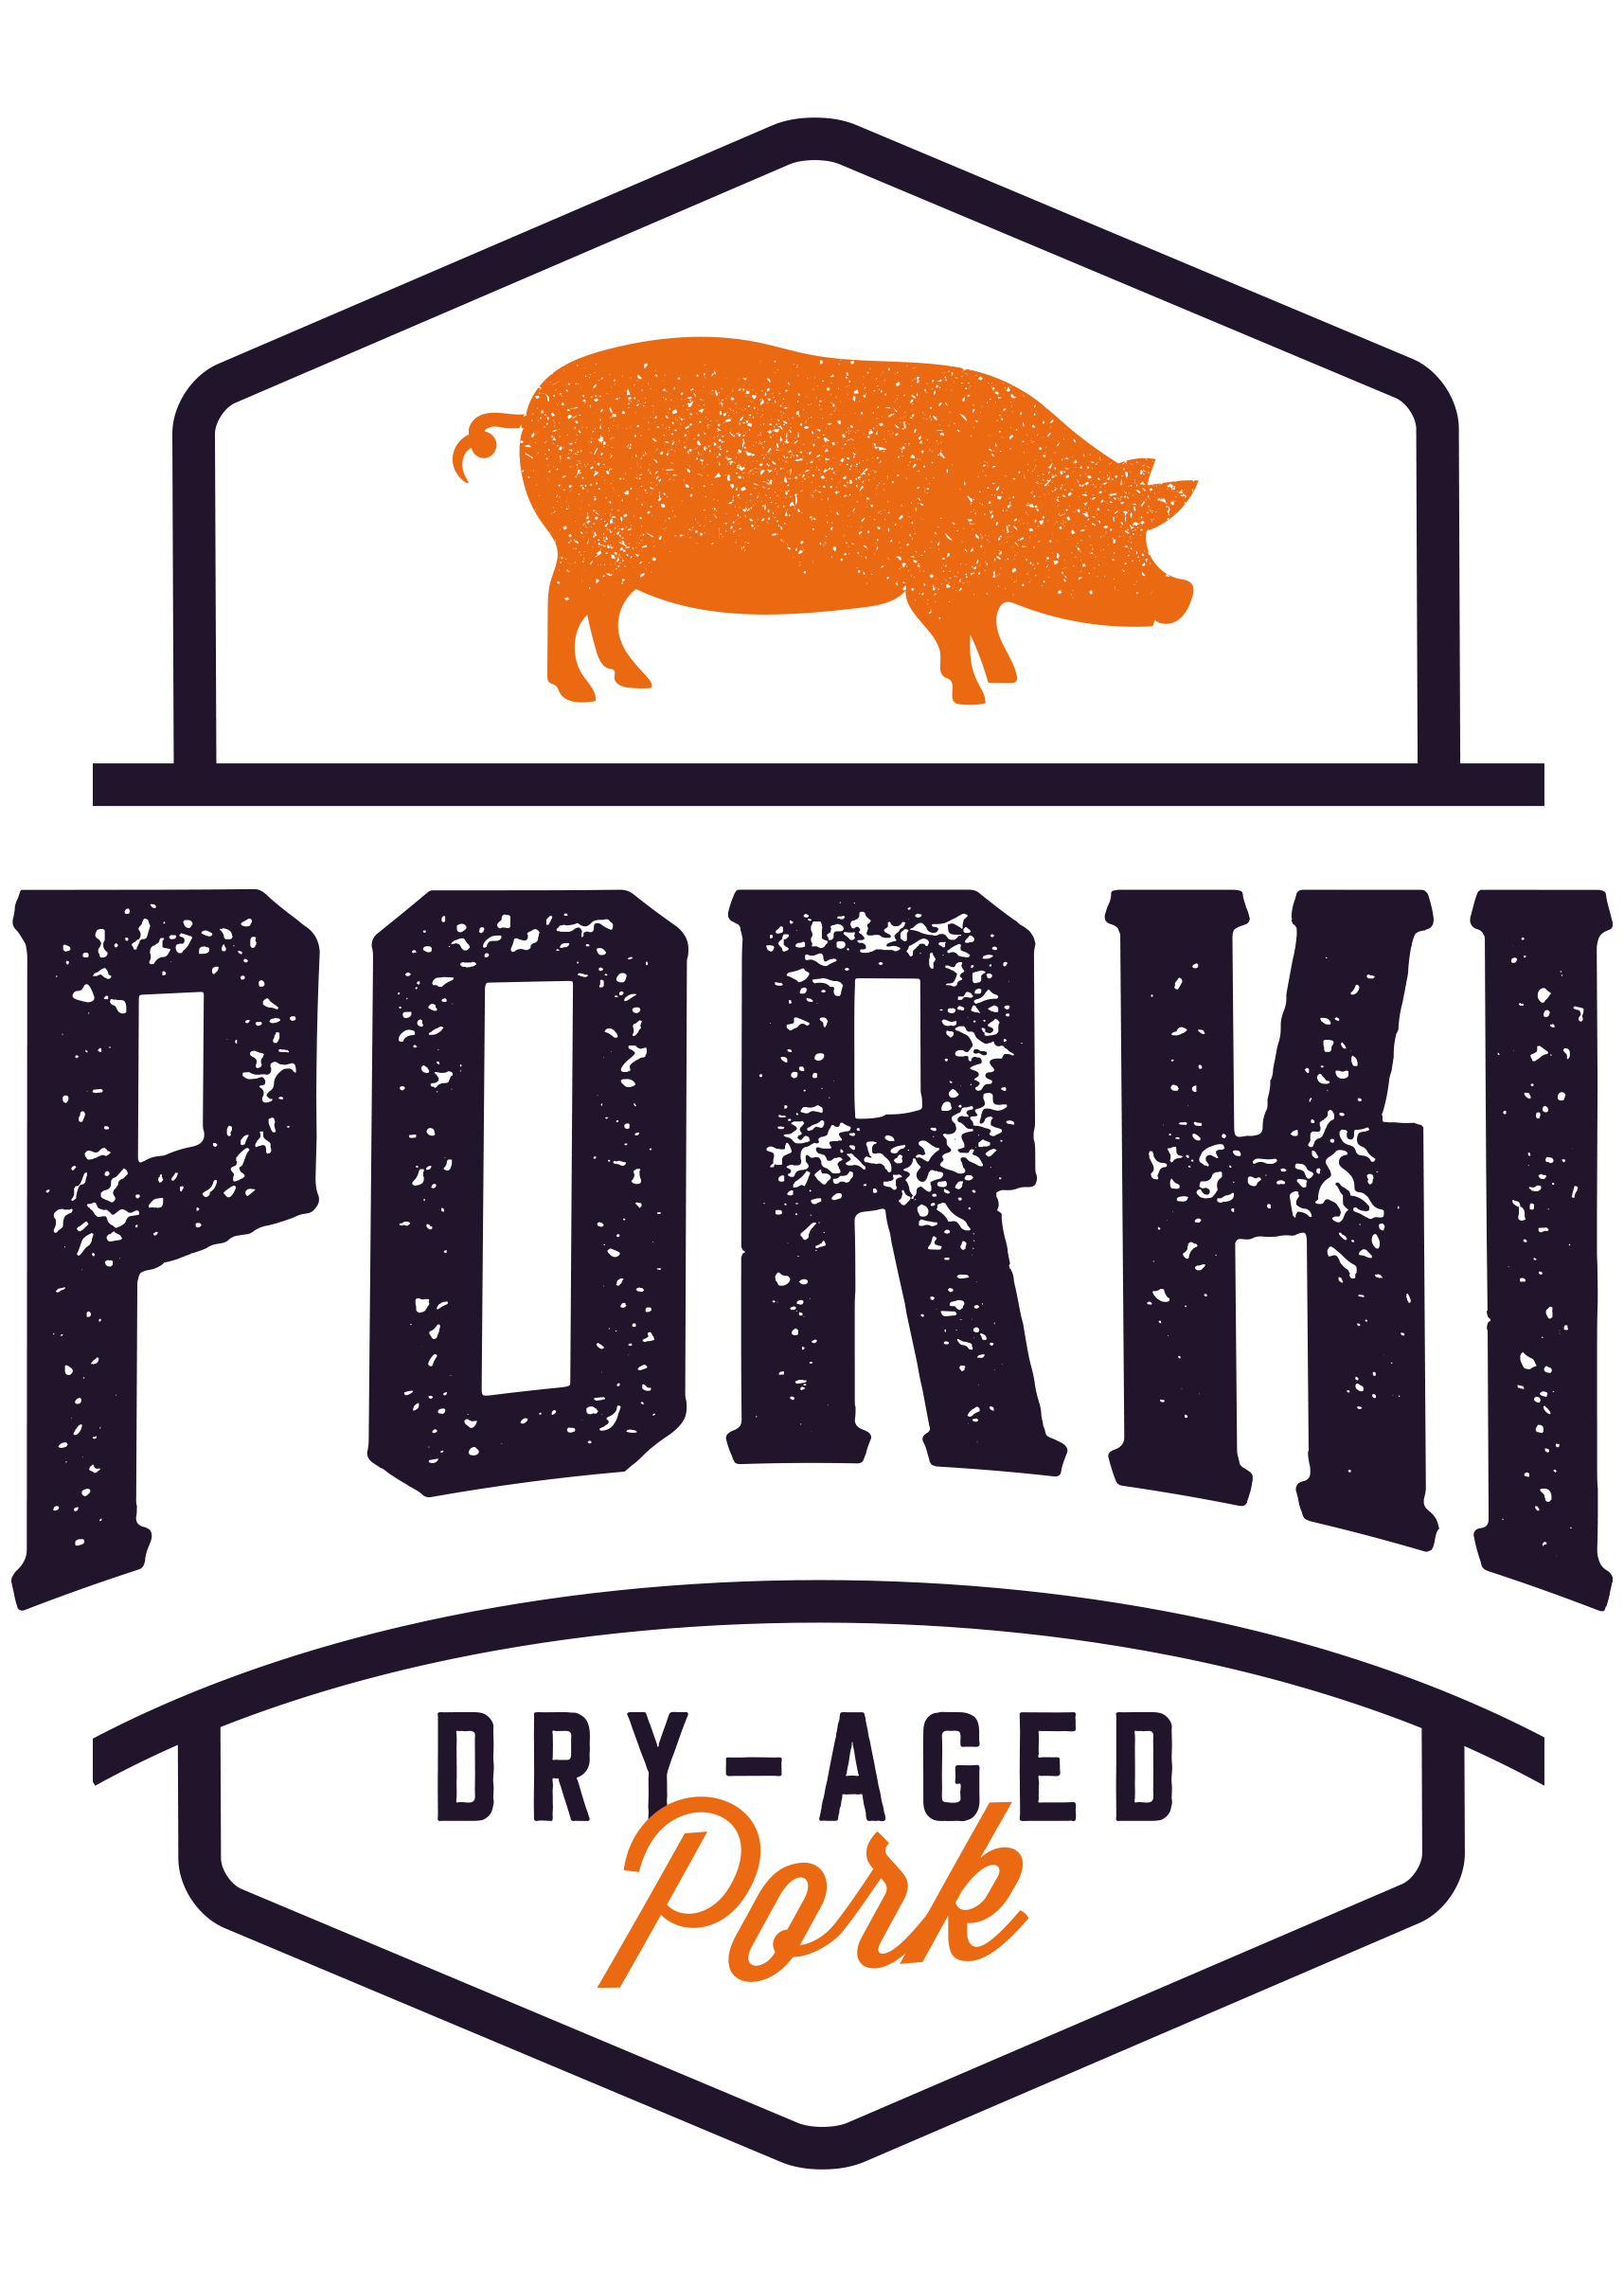 True Wilderness Porki